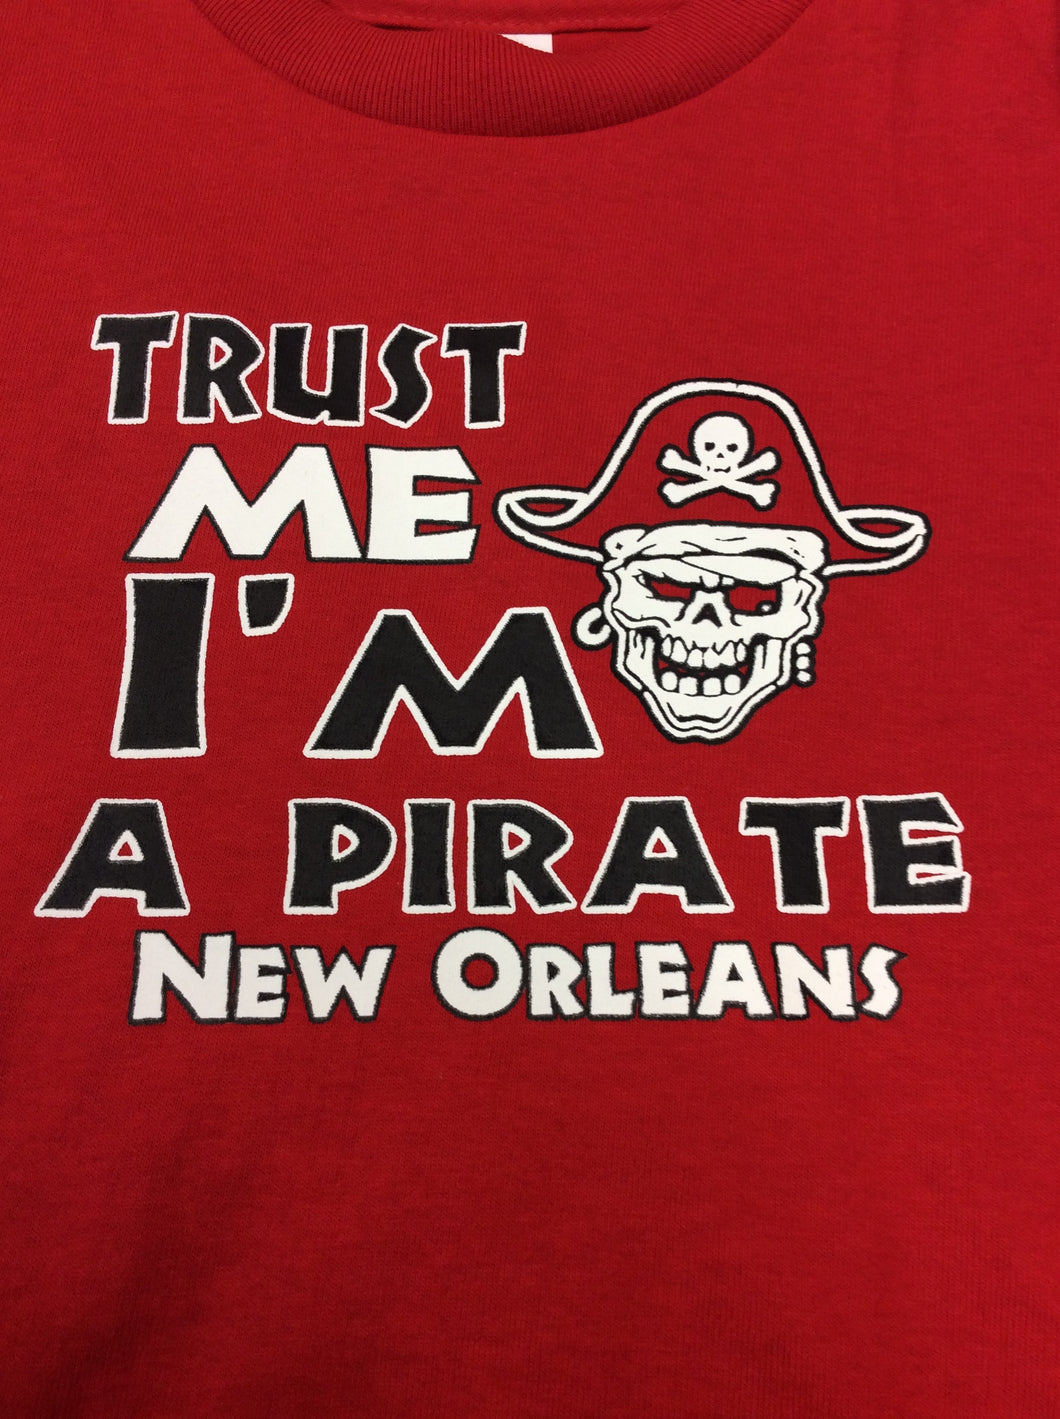 Trust Me I'm a Pirate Kids T-Shirt